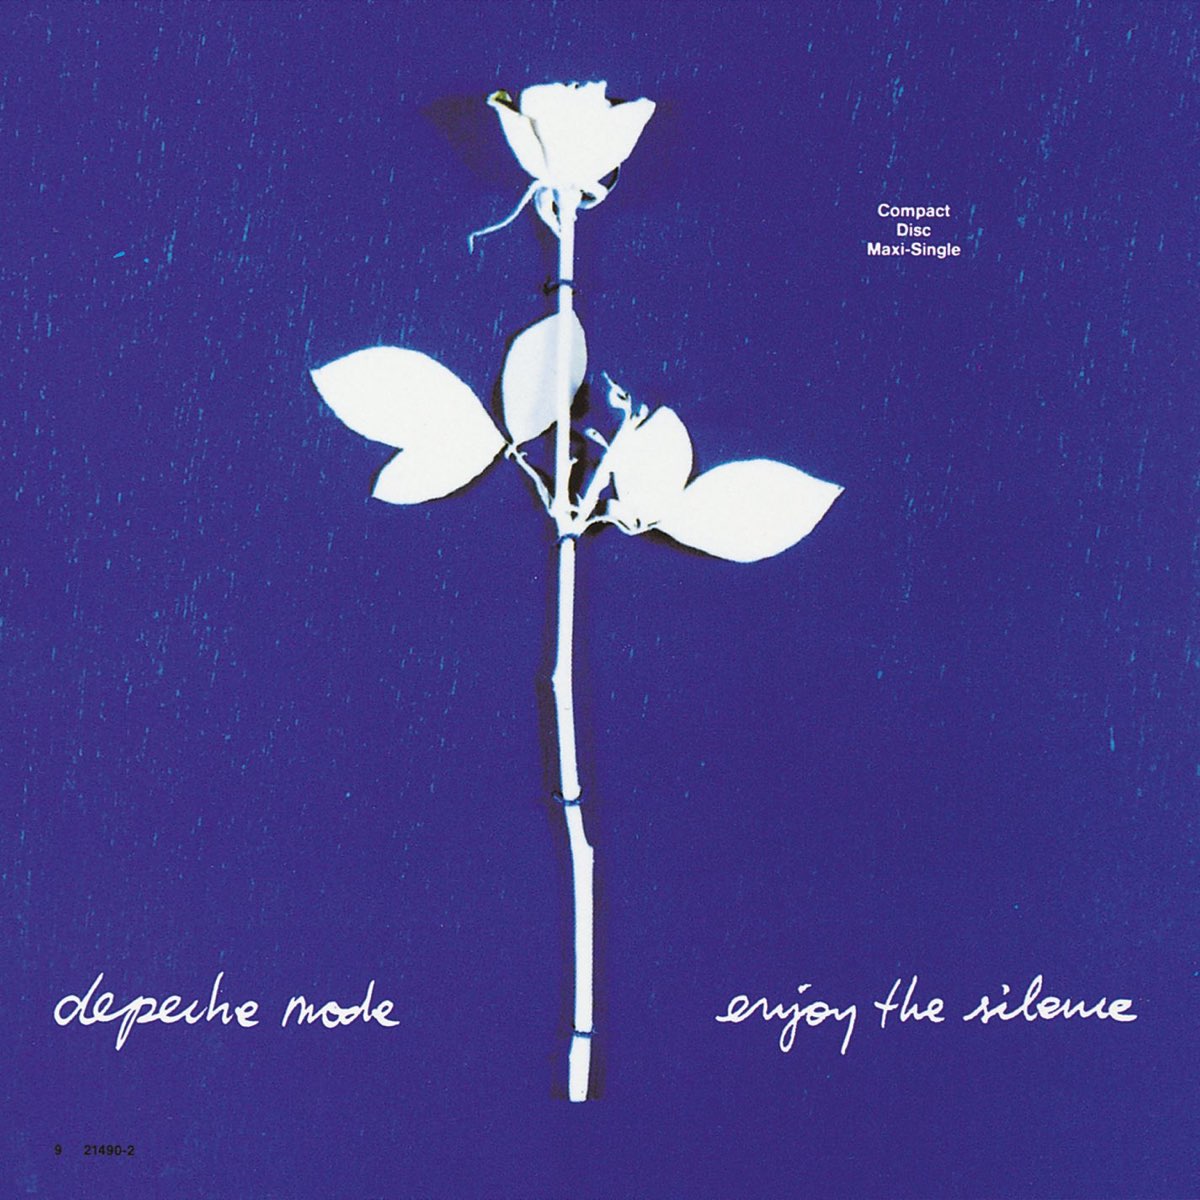 Enjoy the Silence - Album by Depeche Mode - Apple Music